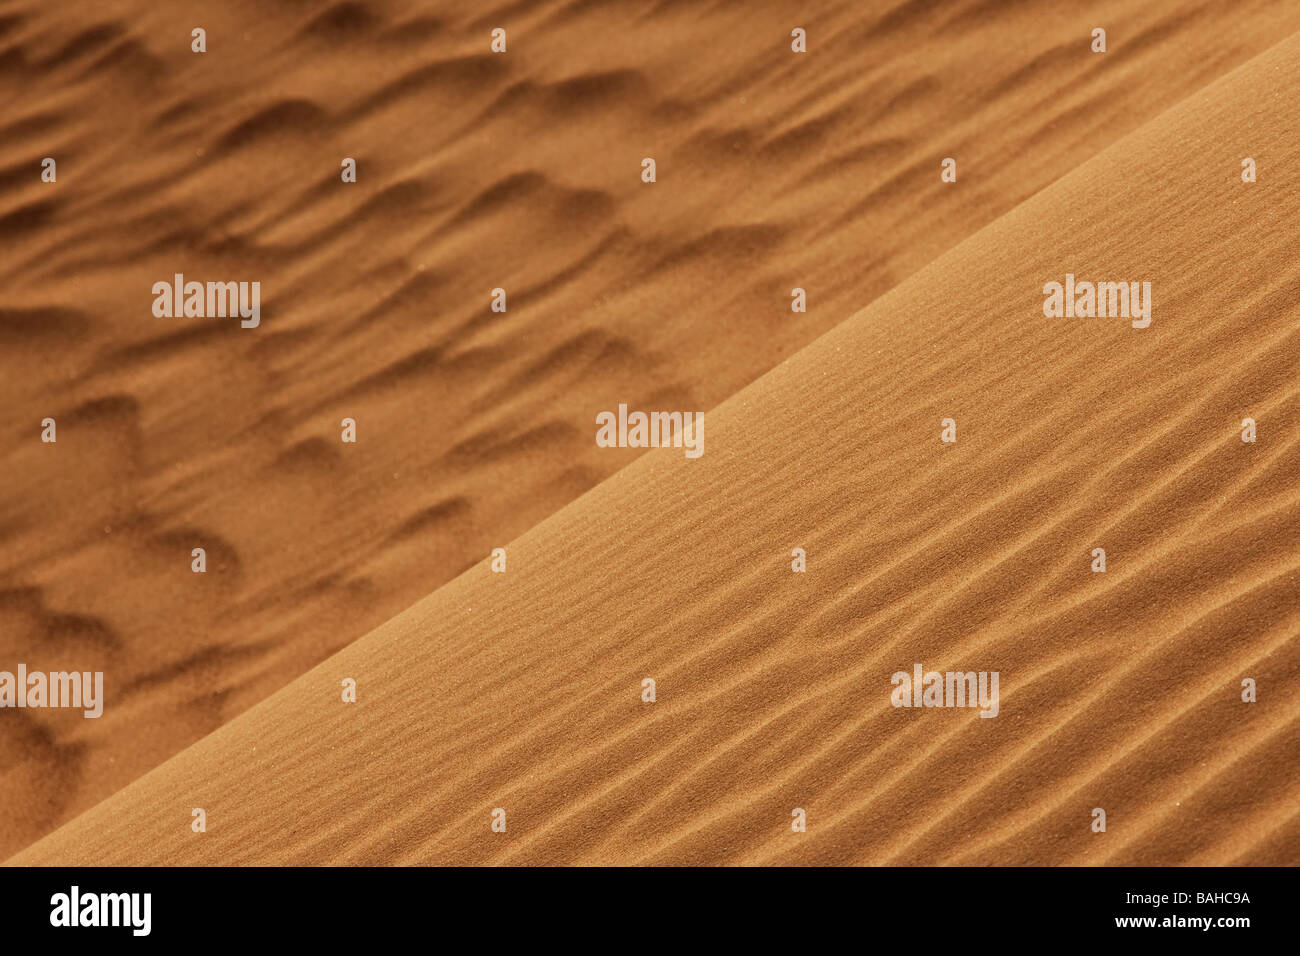 close-up of desert sand pattern Stock Photo